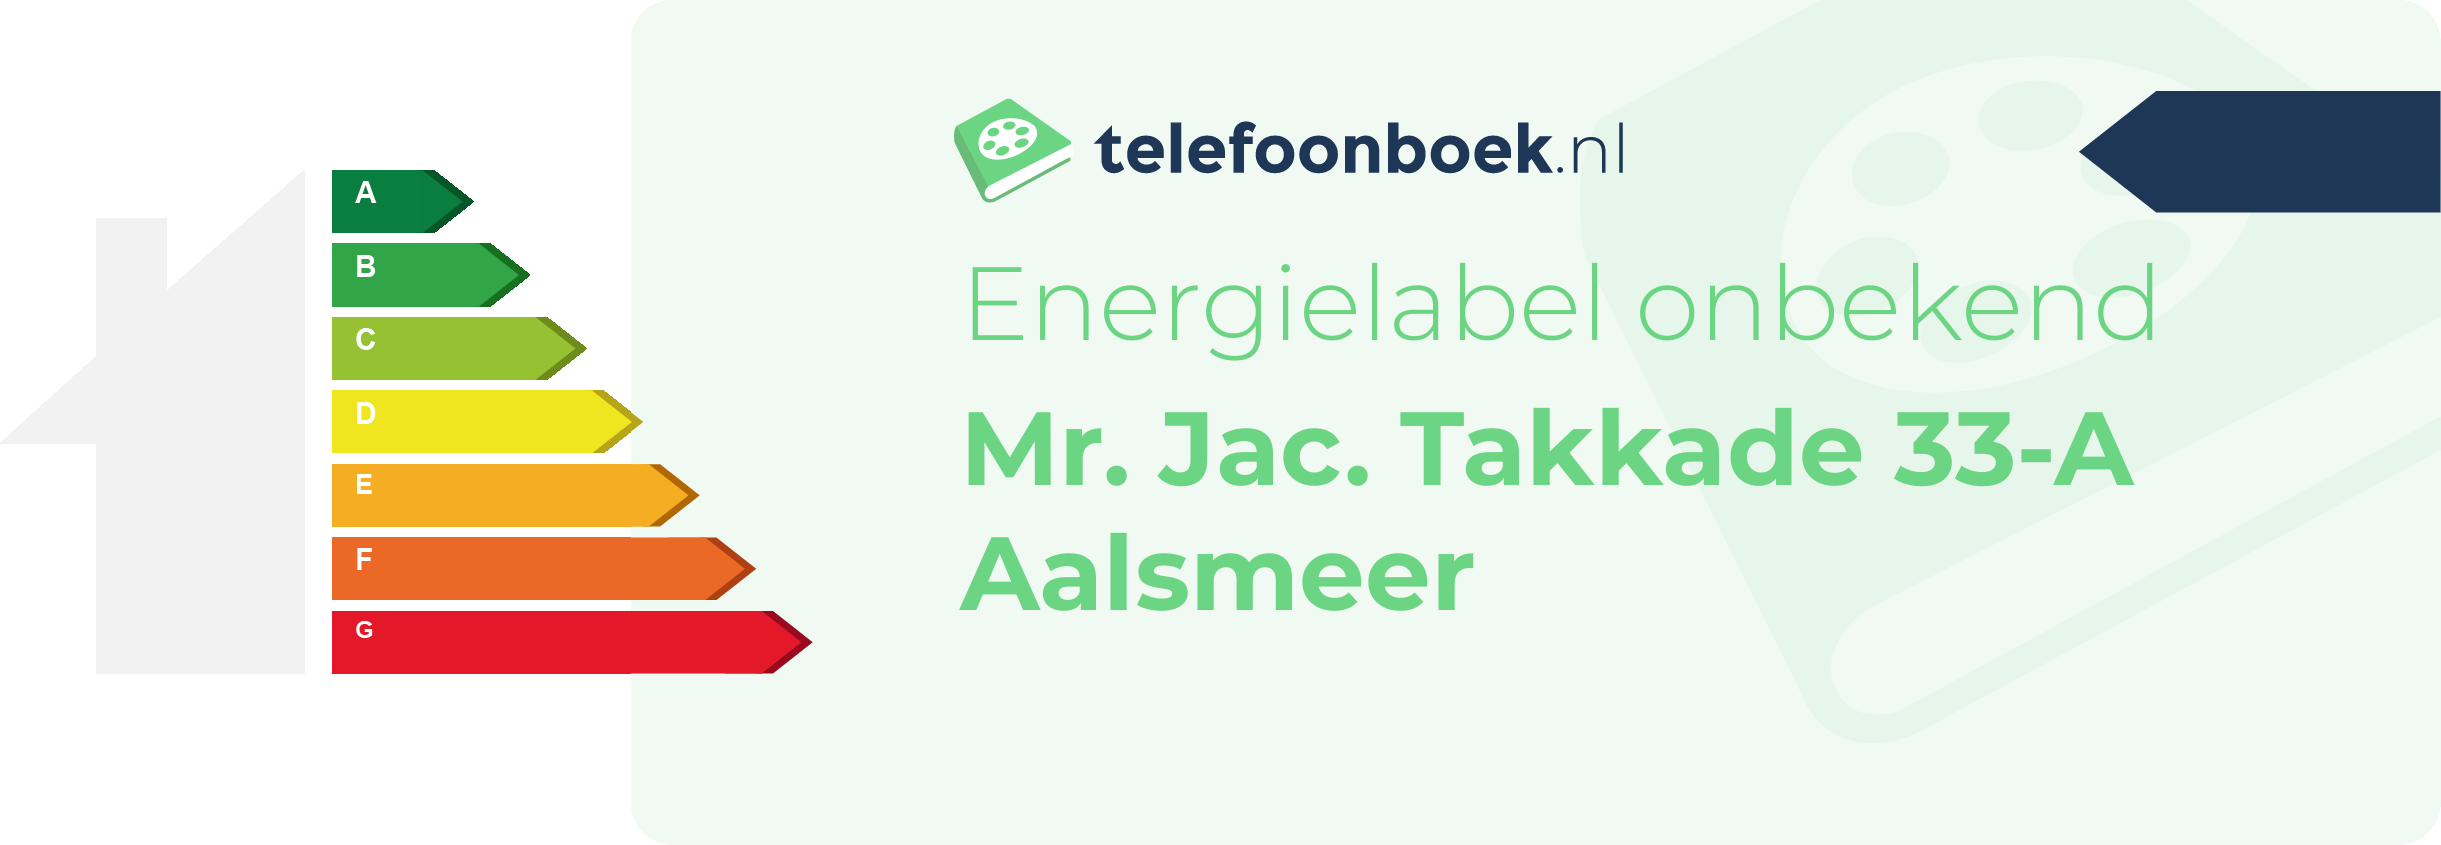 Energielabel Mr. Jac. Takkade 33-A Aalsmeer